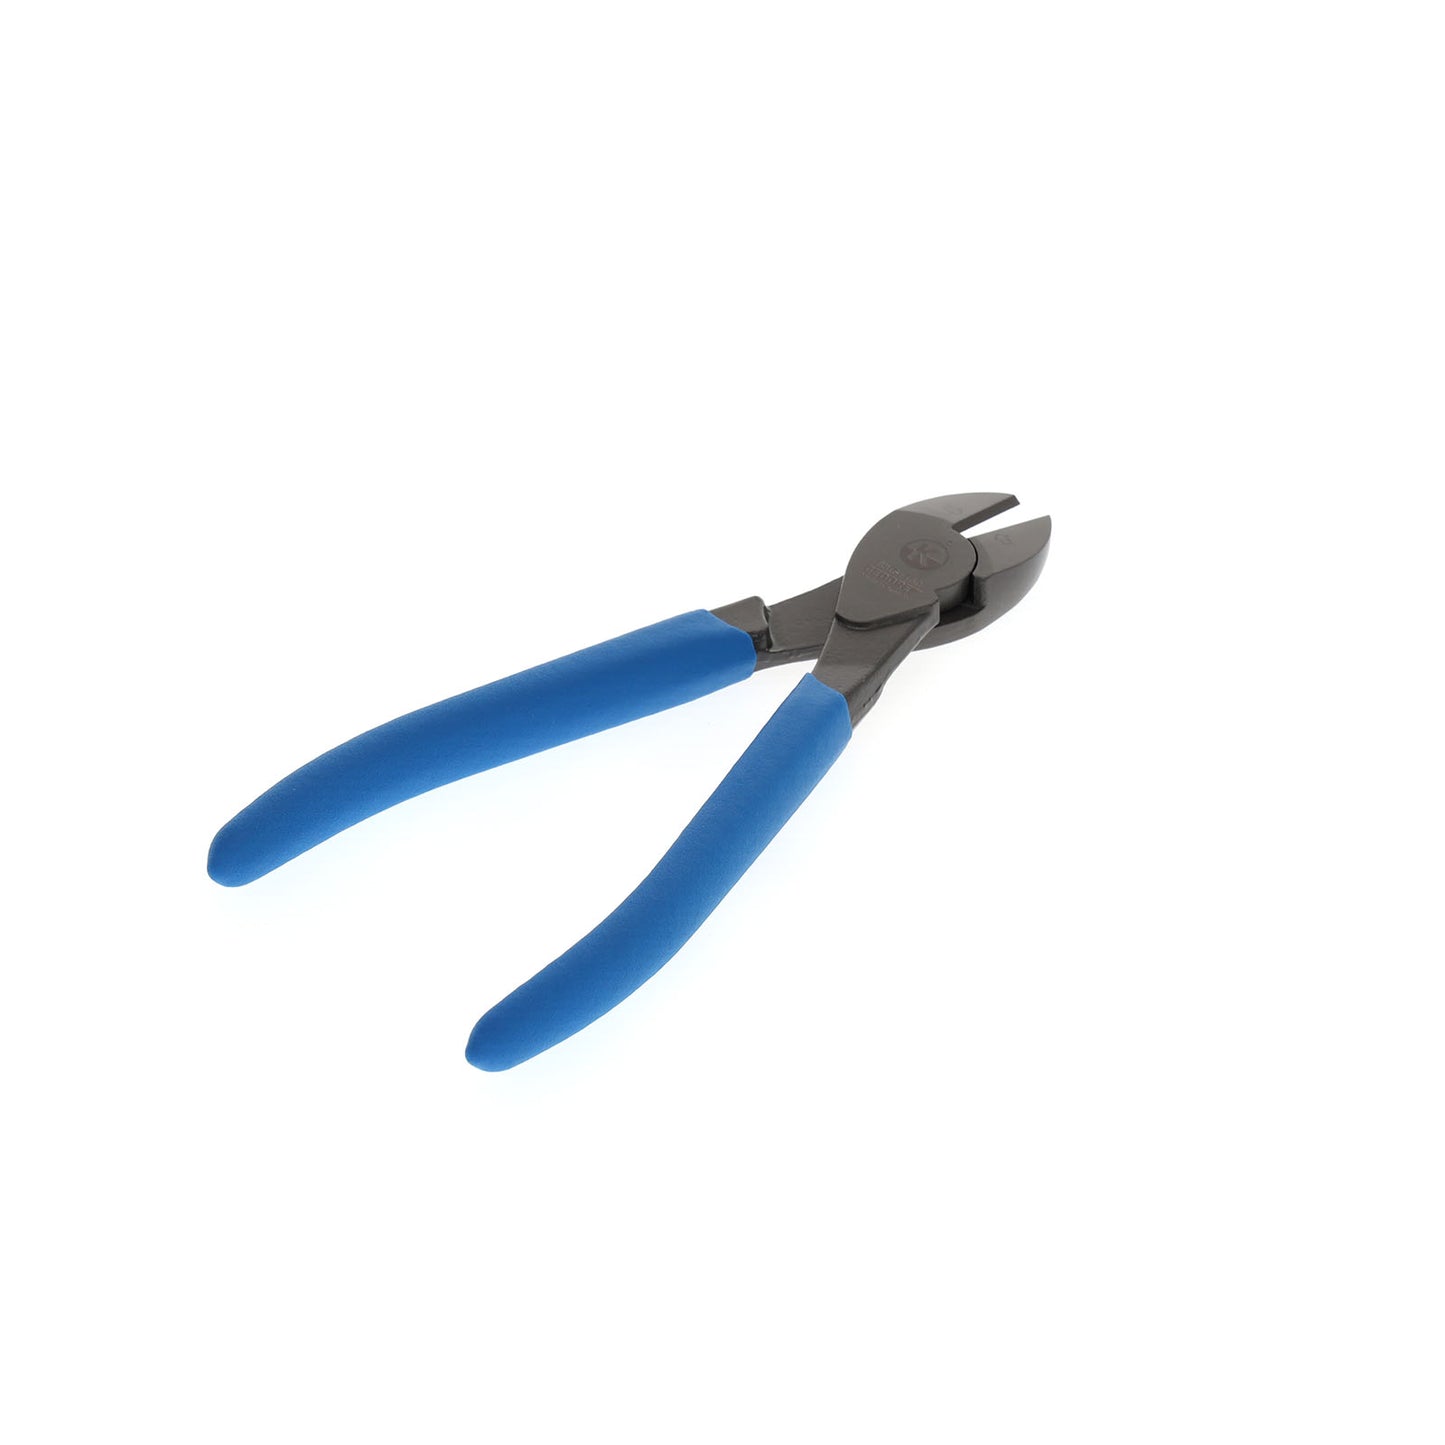 GEDORE 8316-160 TL - Diagonal cutting pliers 160 mm (6712070)